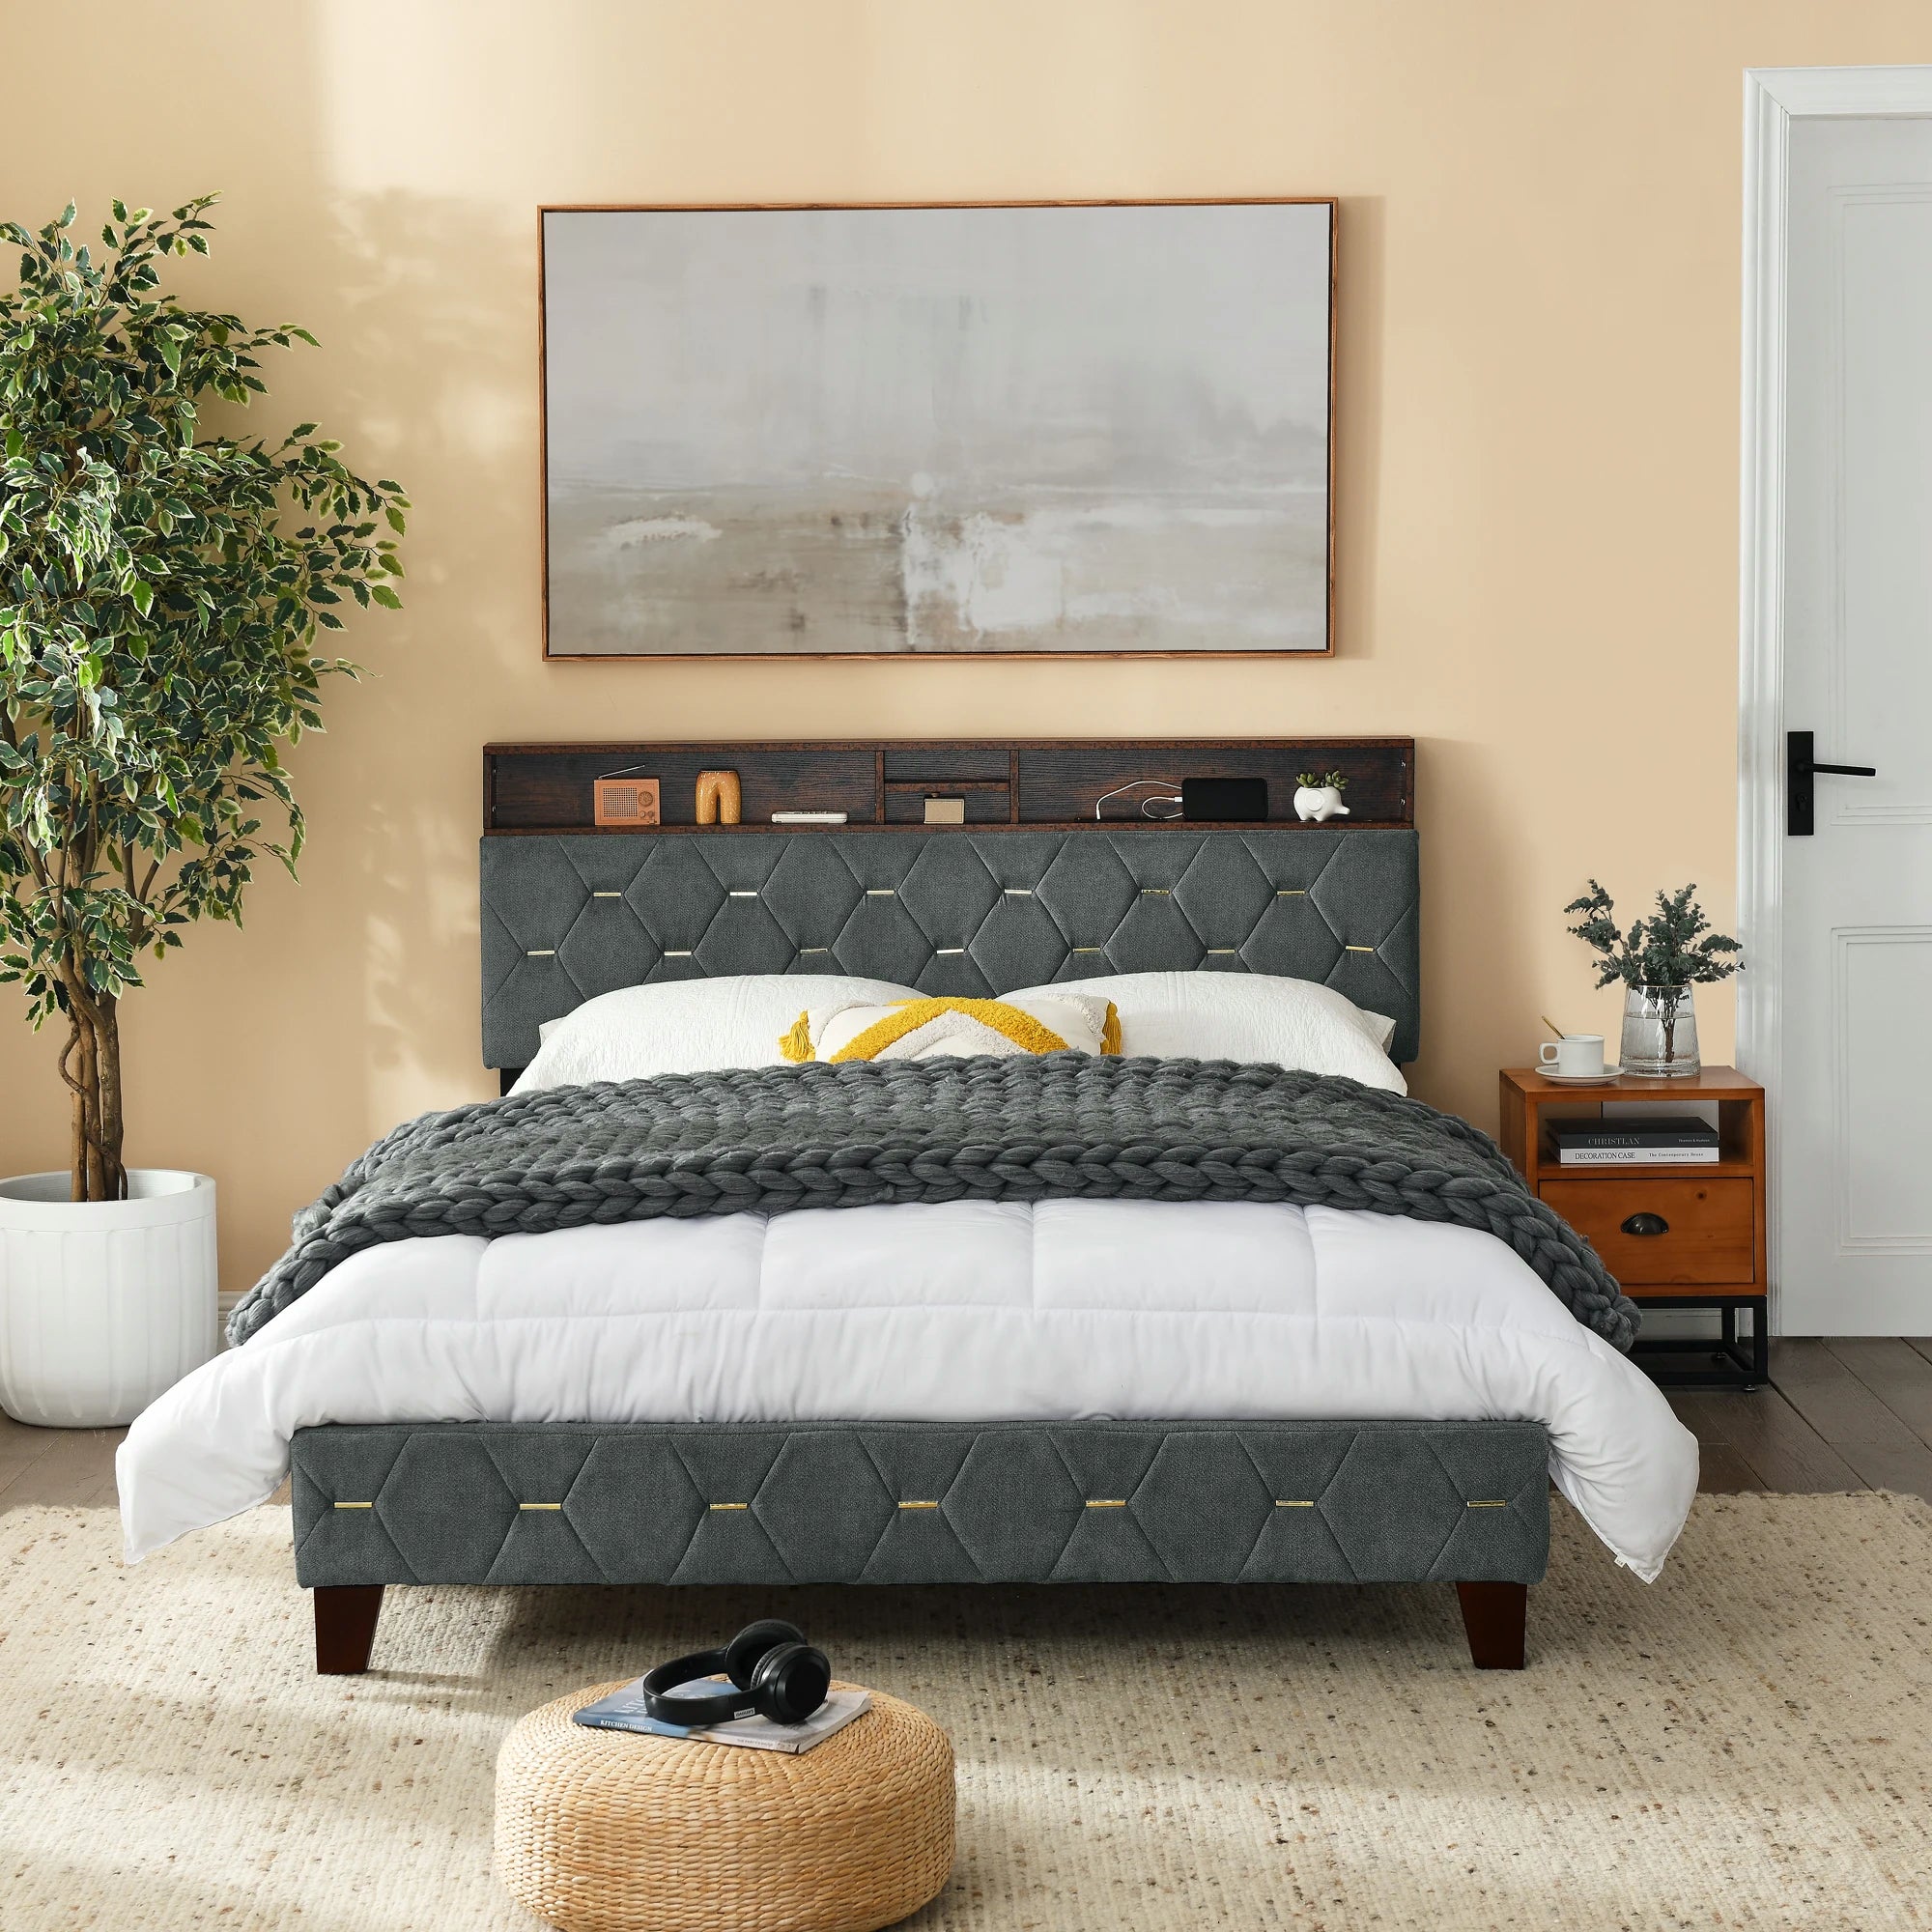 Queen/Full Bed Frame Shelf Upholstered Headboard Platform Bed W/Outlet&USB Ports Wood Legs Grey/Beige Easy Assembly[US-W]